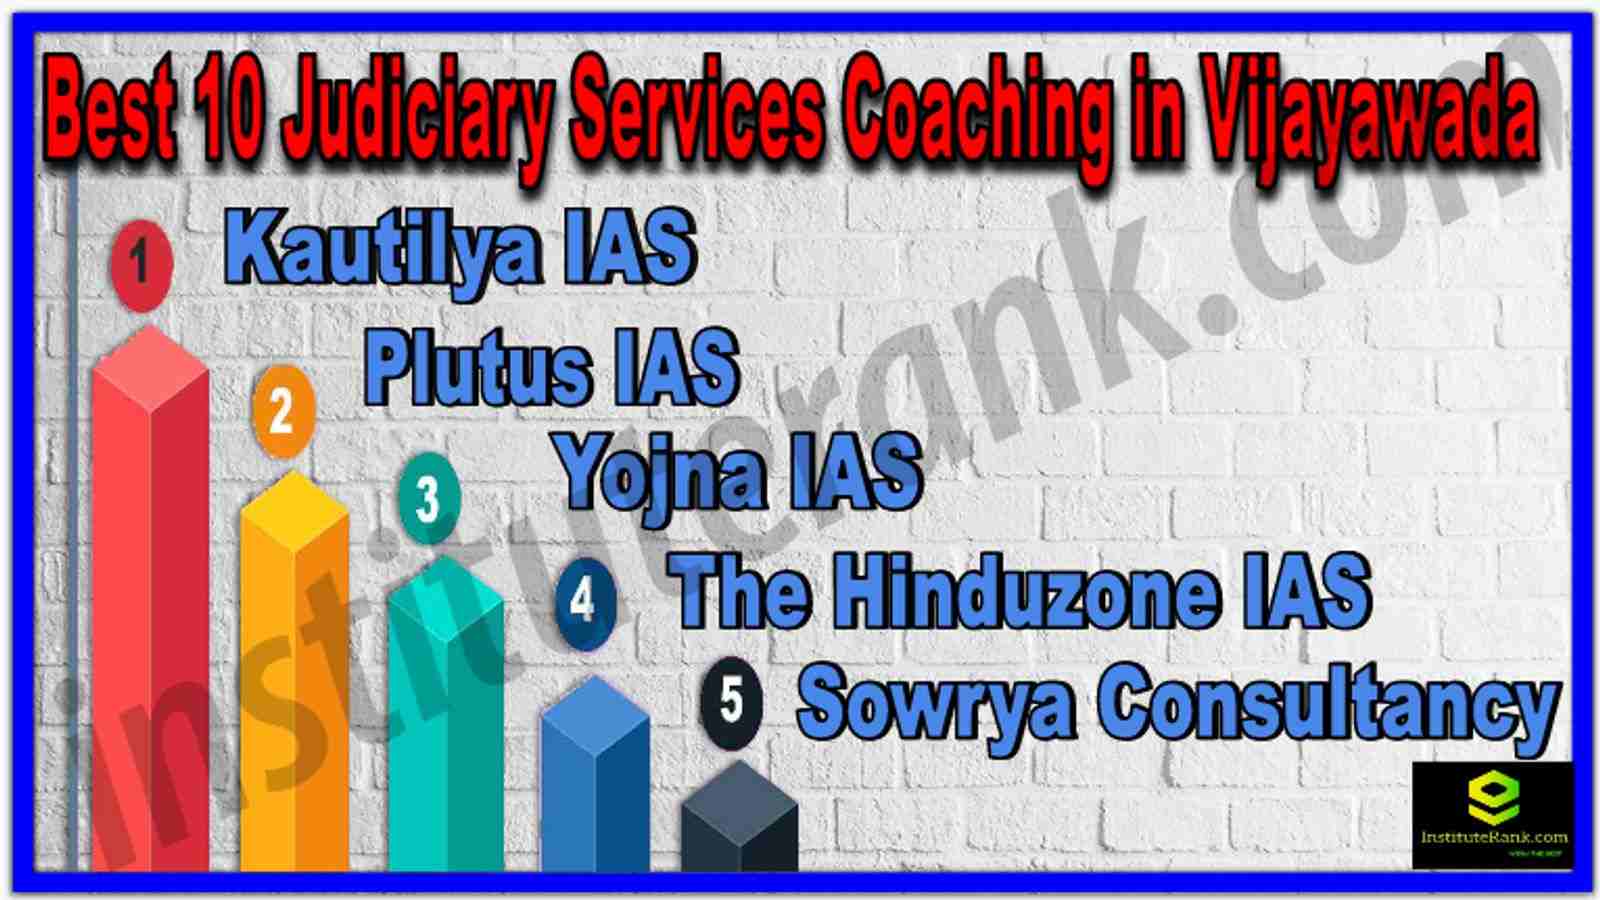 Best 10 Judiciary Services Coaching in Vijayawada